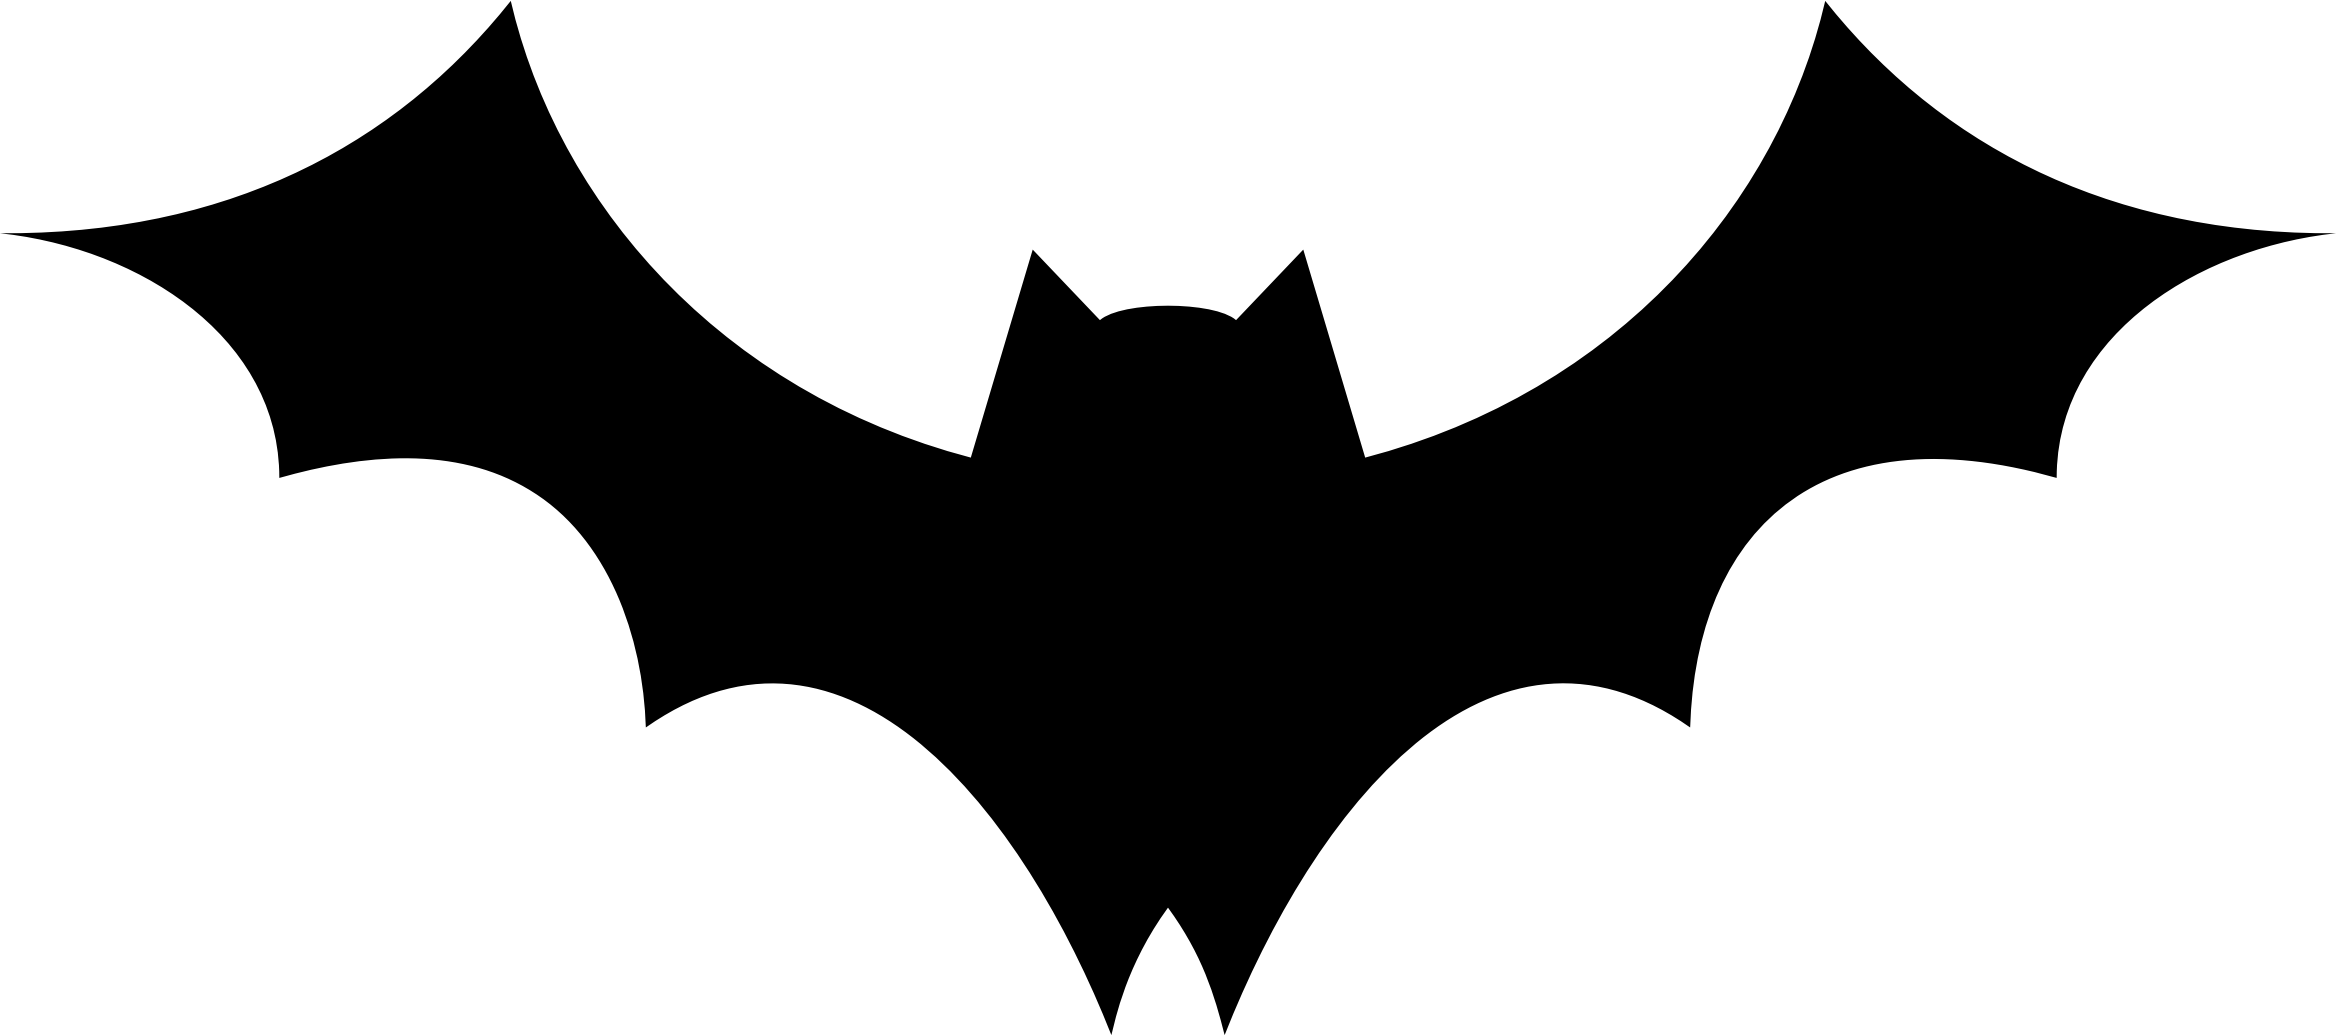 Bat Silhouette Images for Logo - Clipart - Geometric Bat Silhouette